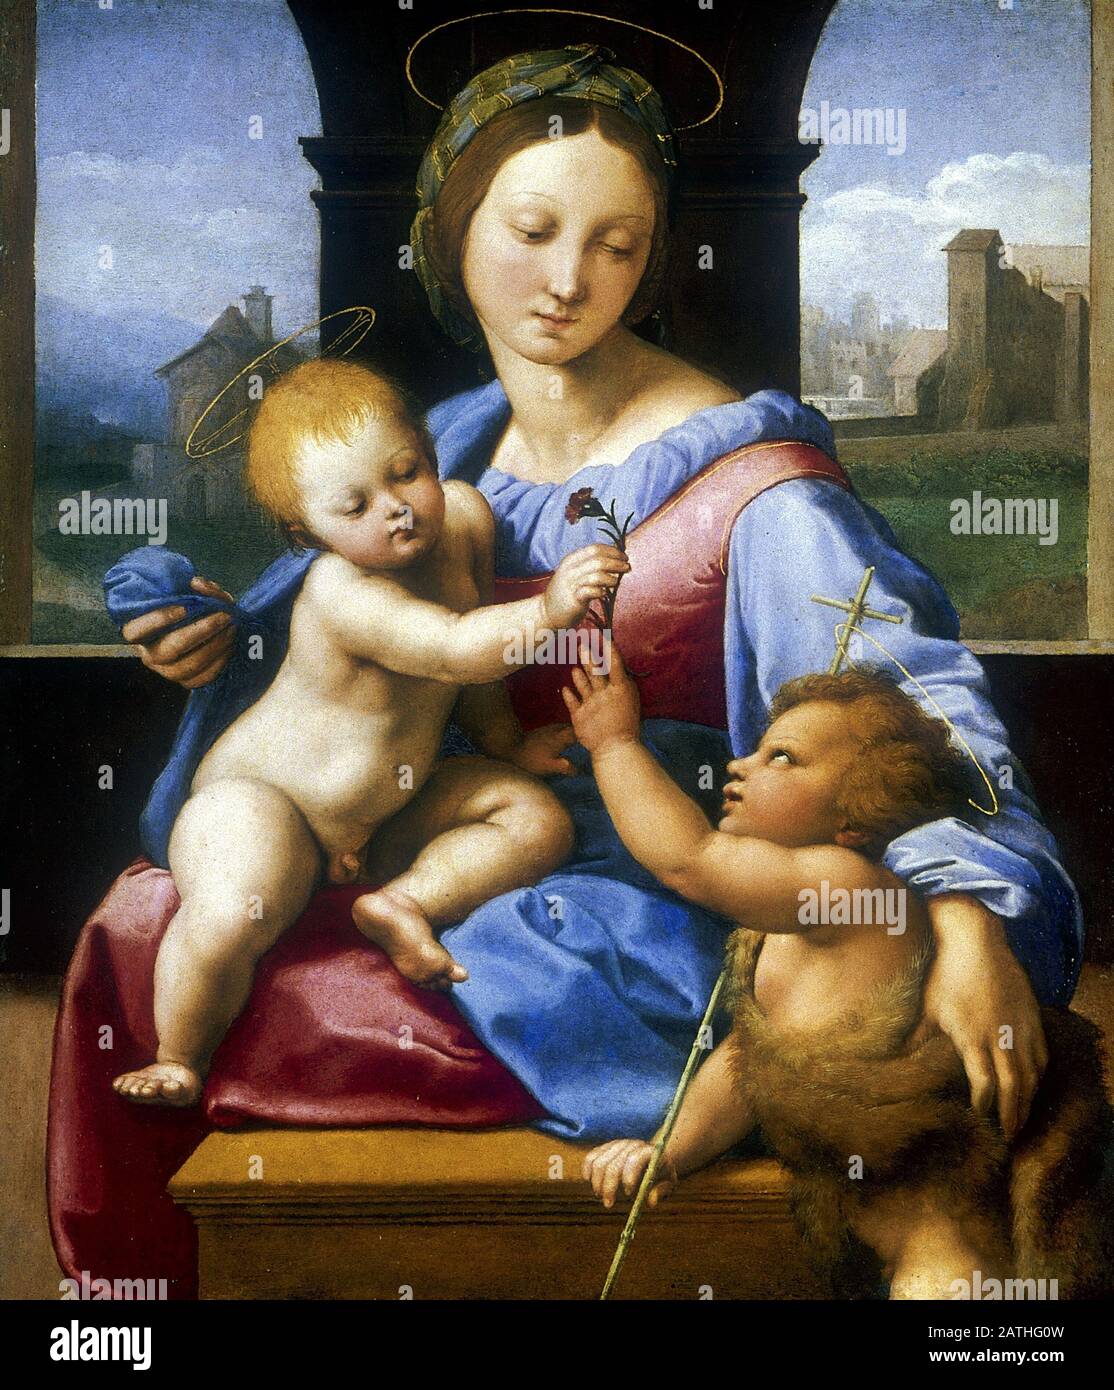 Raffaello Sanzio da Urbino known as Raphael Italian school The Madonna and Child with the Infant Baptist (The Garvagh Madonna) About 1509-1510 Oil on wood (38.9 x 32.9 cm) London, National Gallery Stock Photo